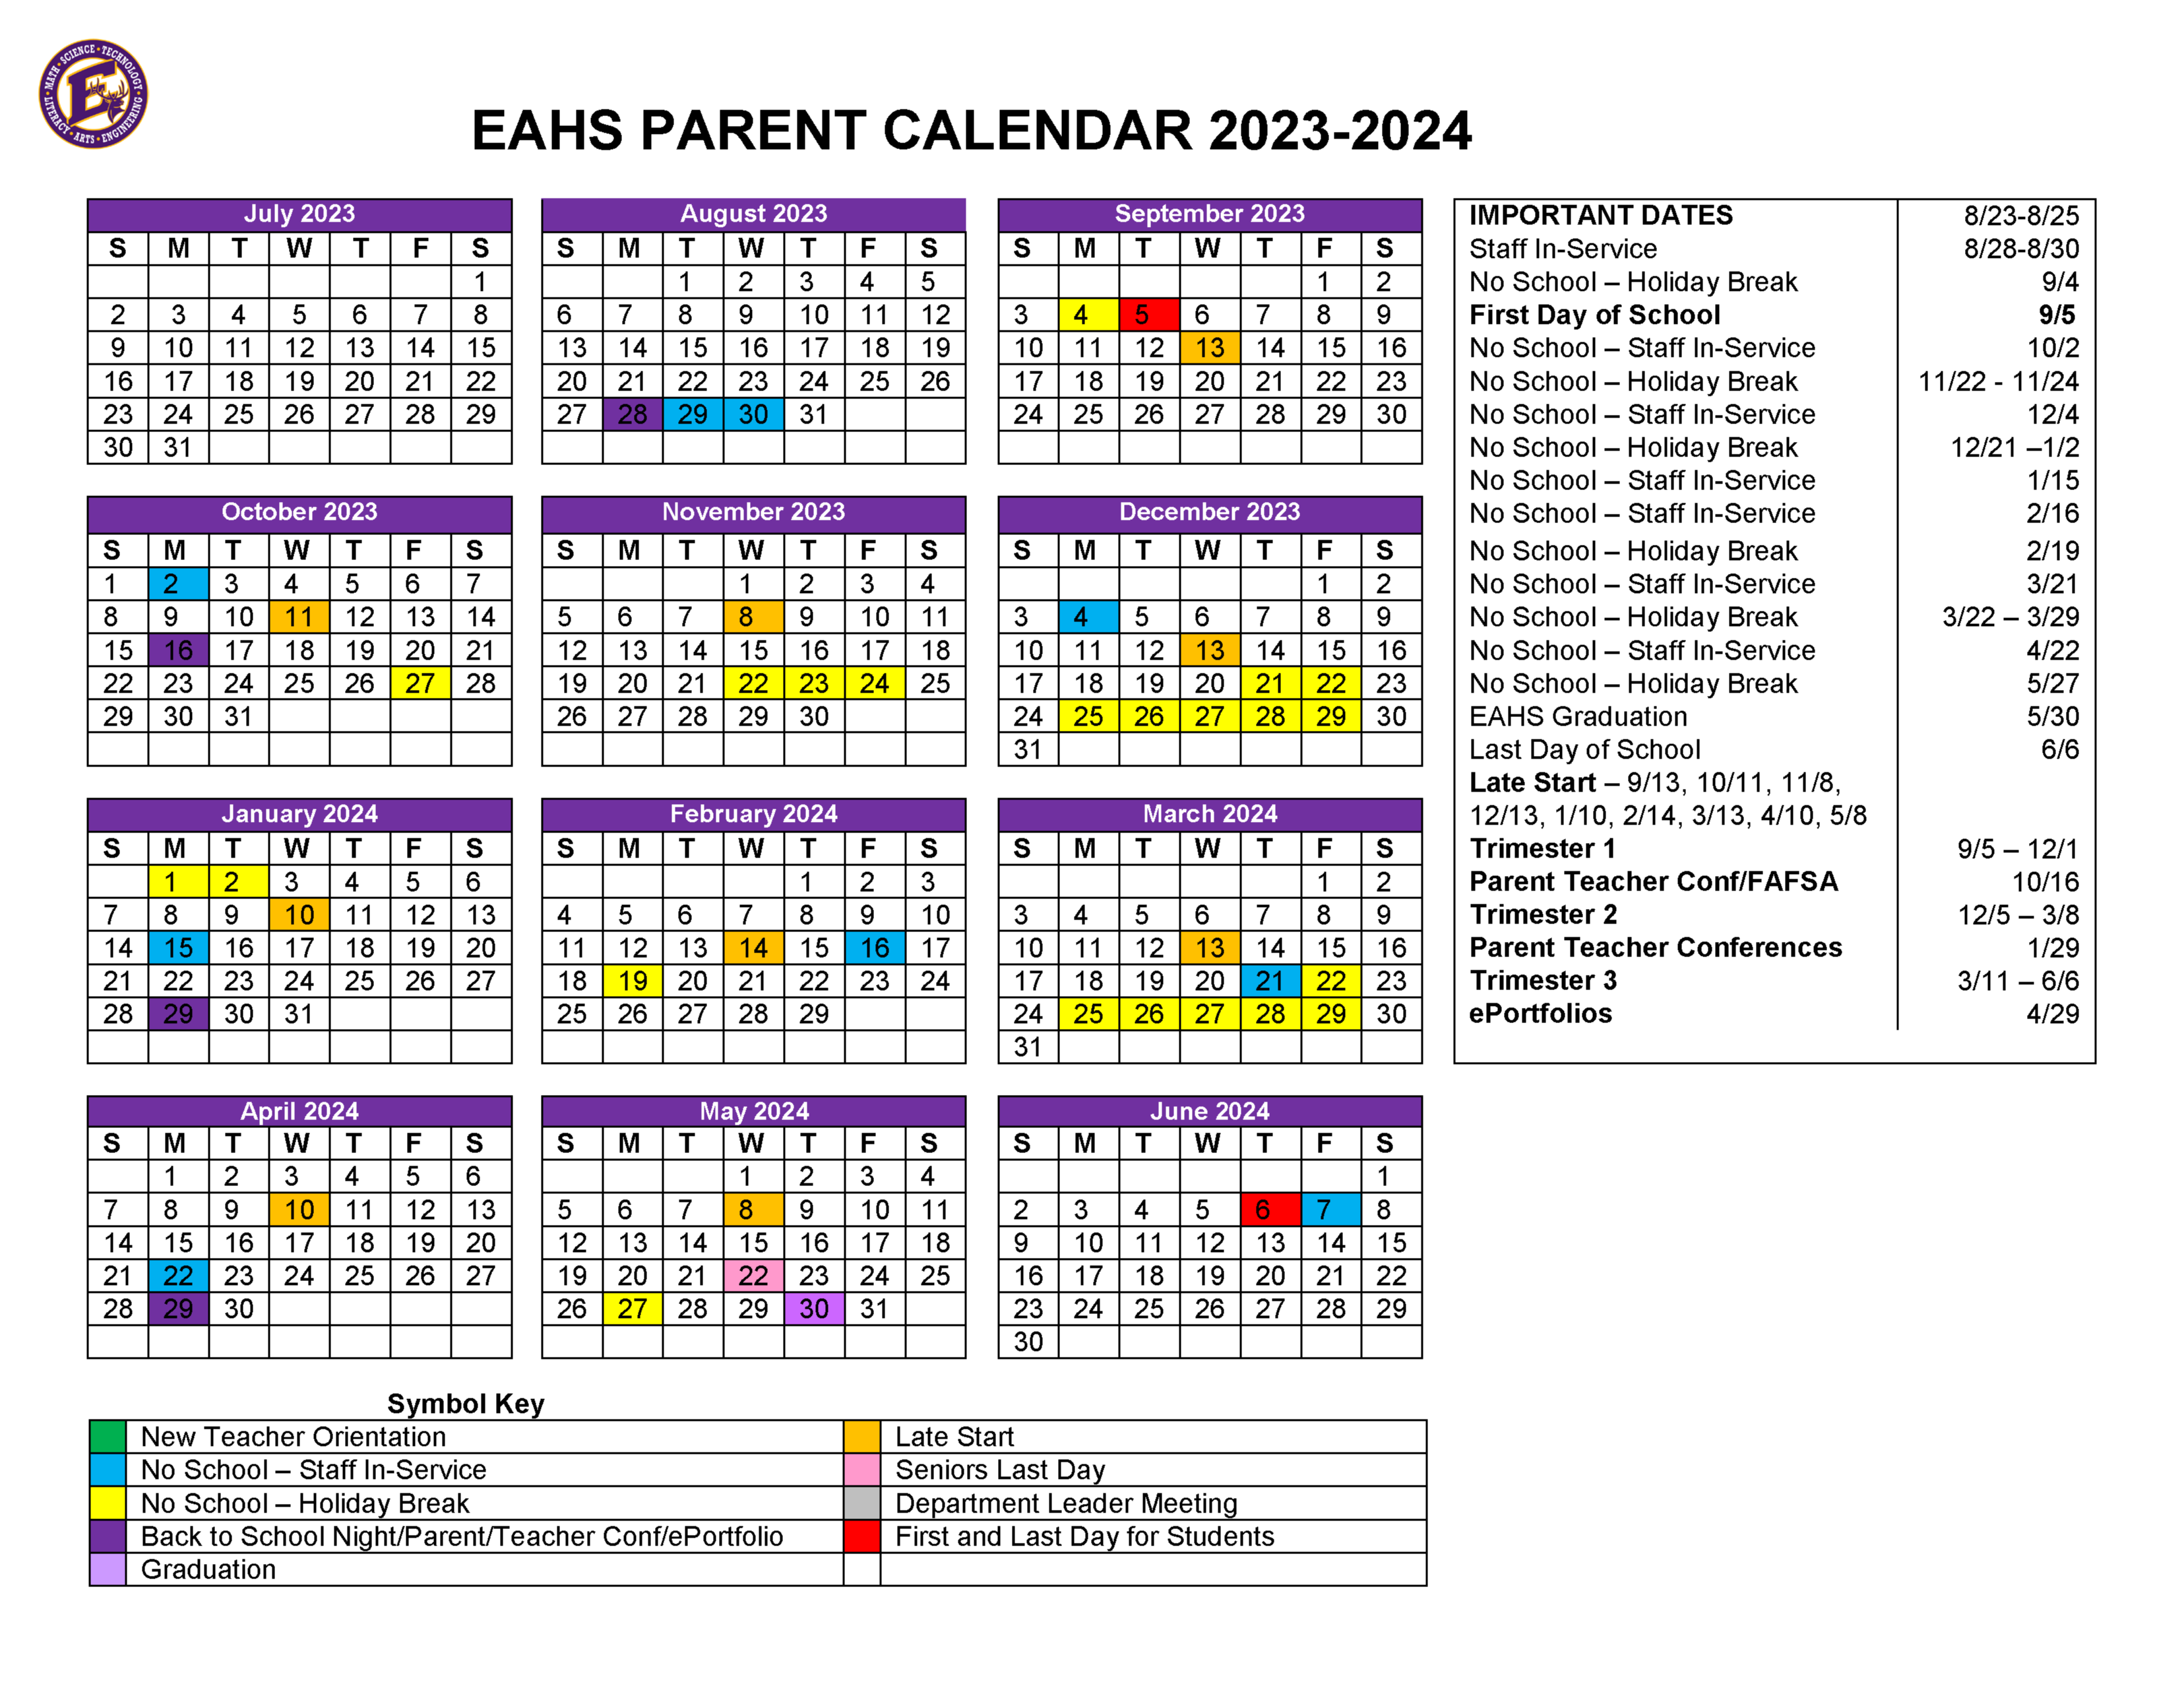 EAHS Parent Calendar 2022-2023